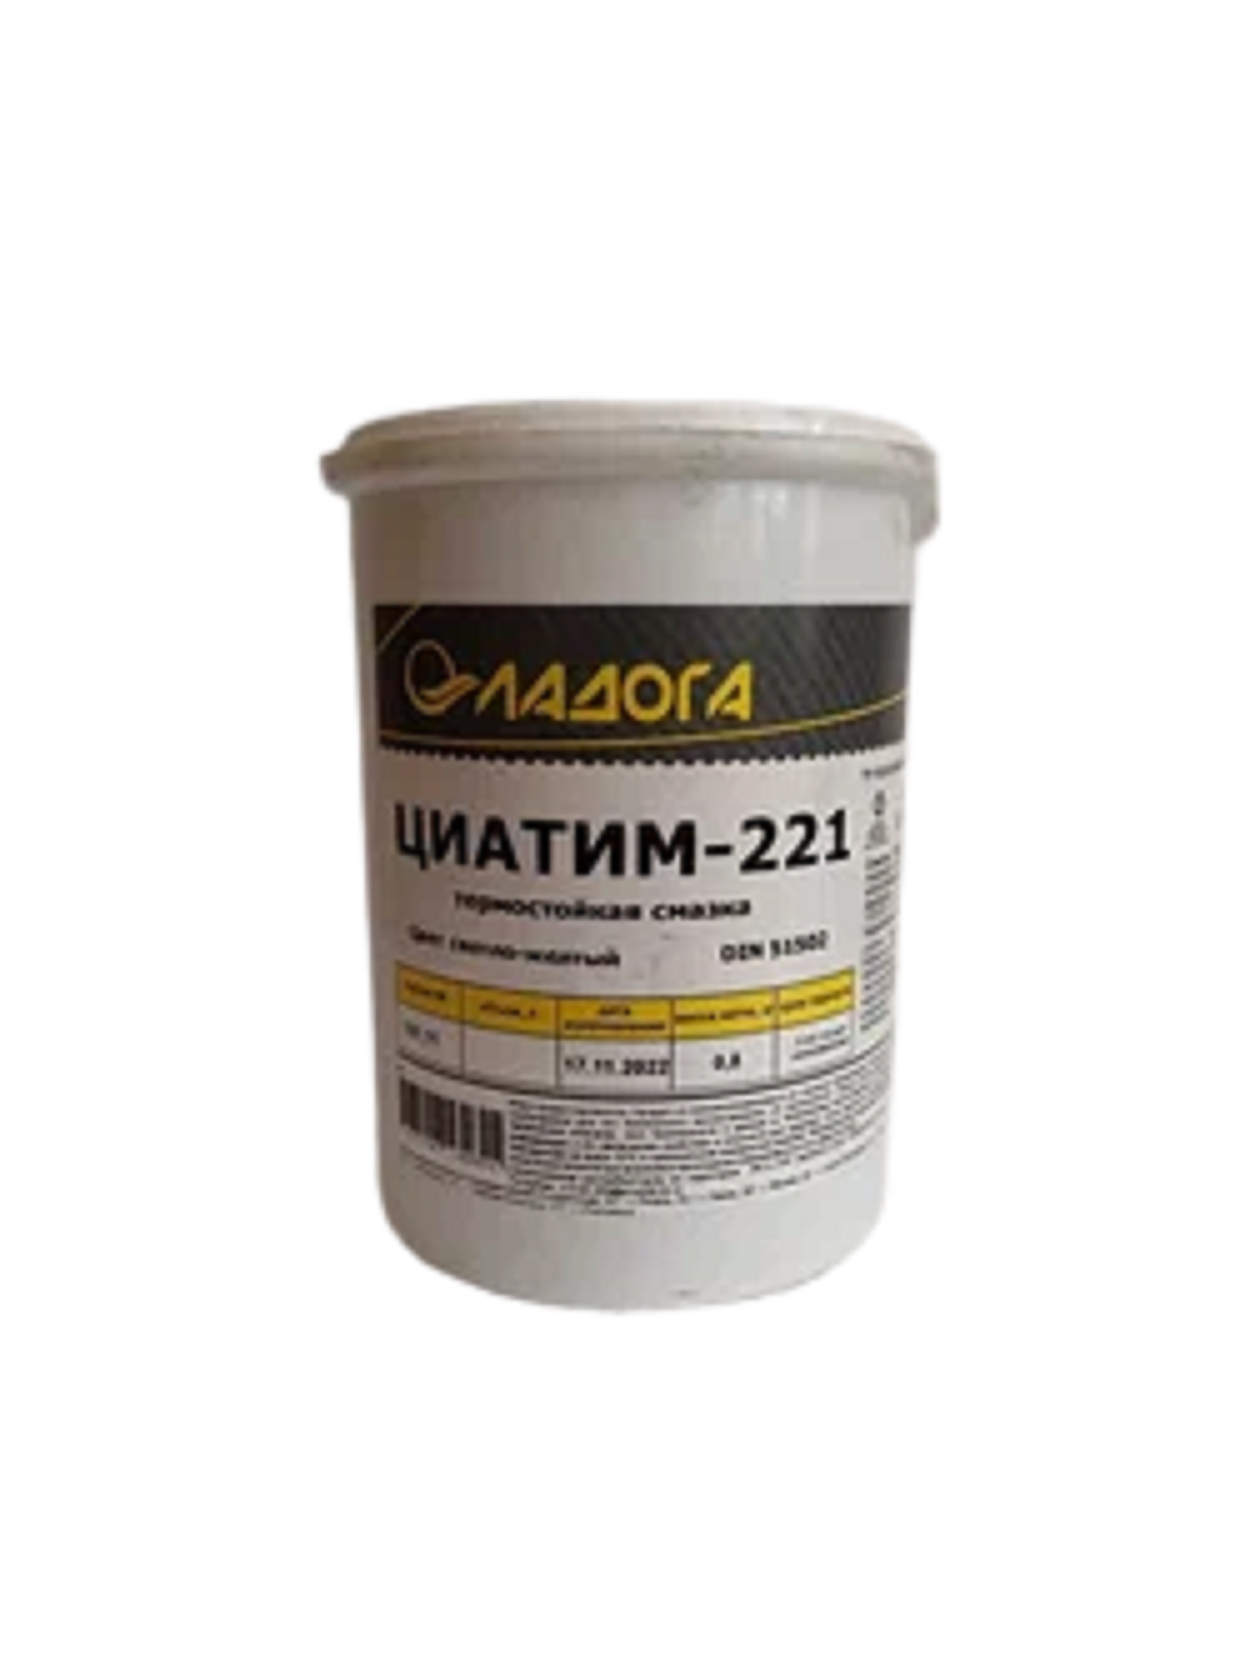 Смазка Ладога Циатим-221 0,8 кг смазка ладога литол 24 10 кг